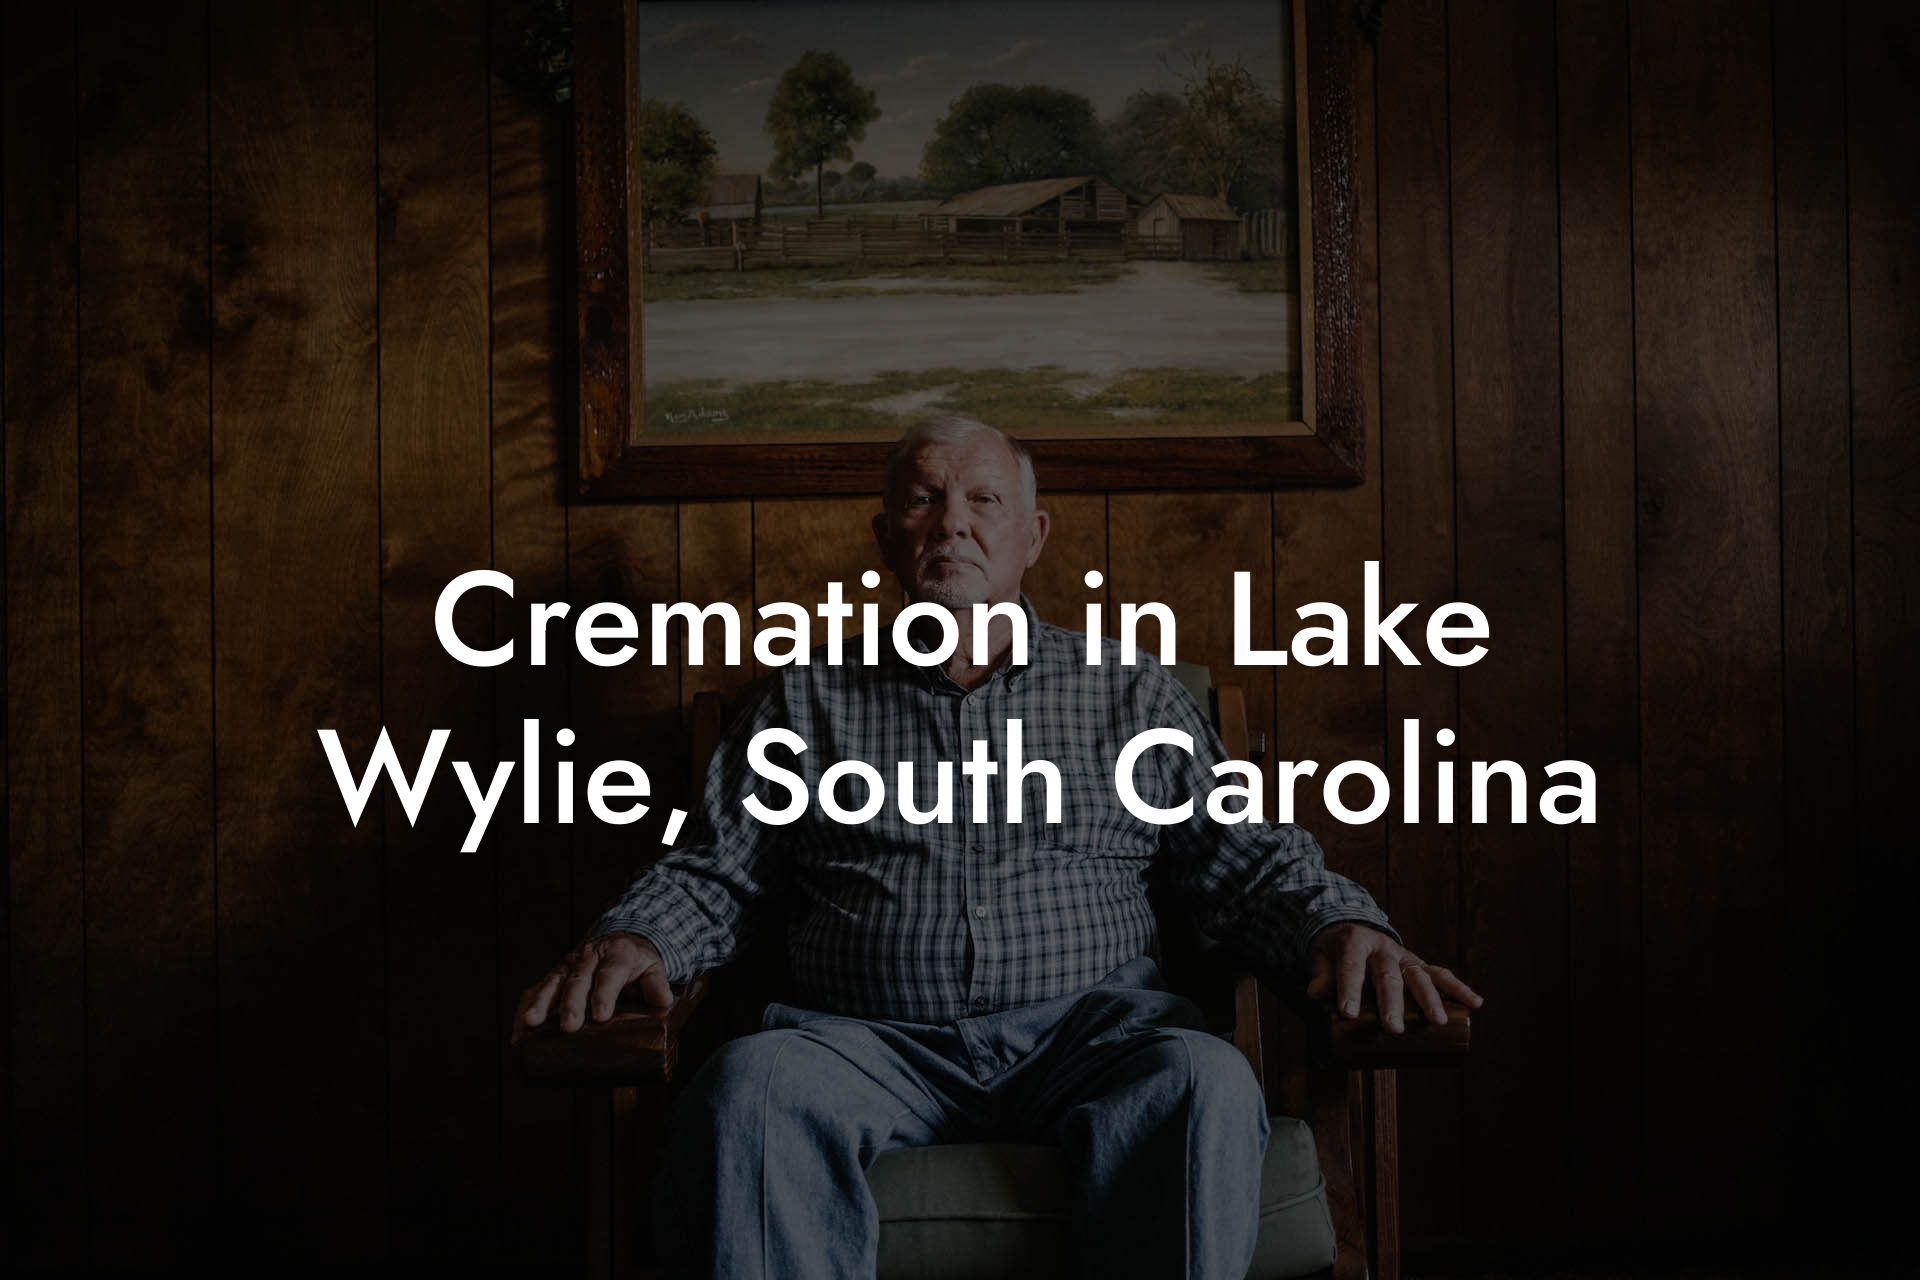 Cremation in Lake Wylie, South Carolina